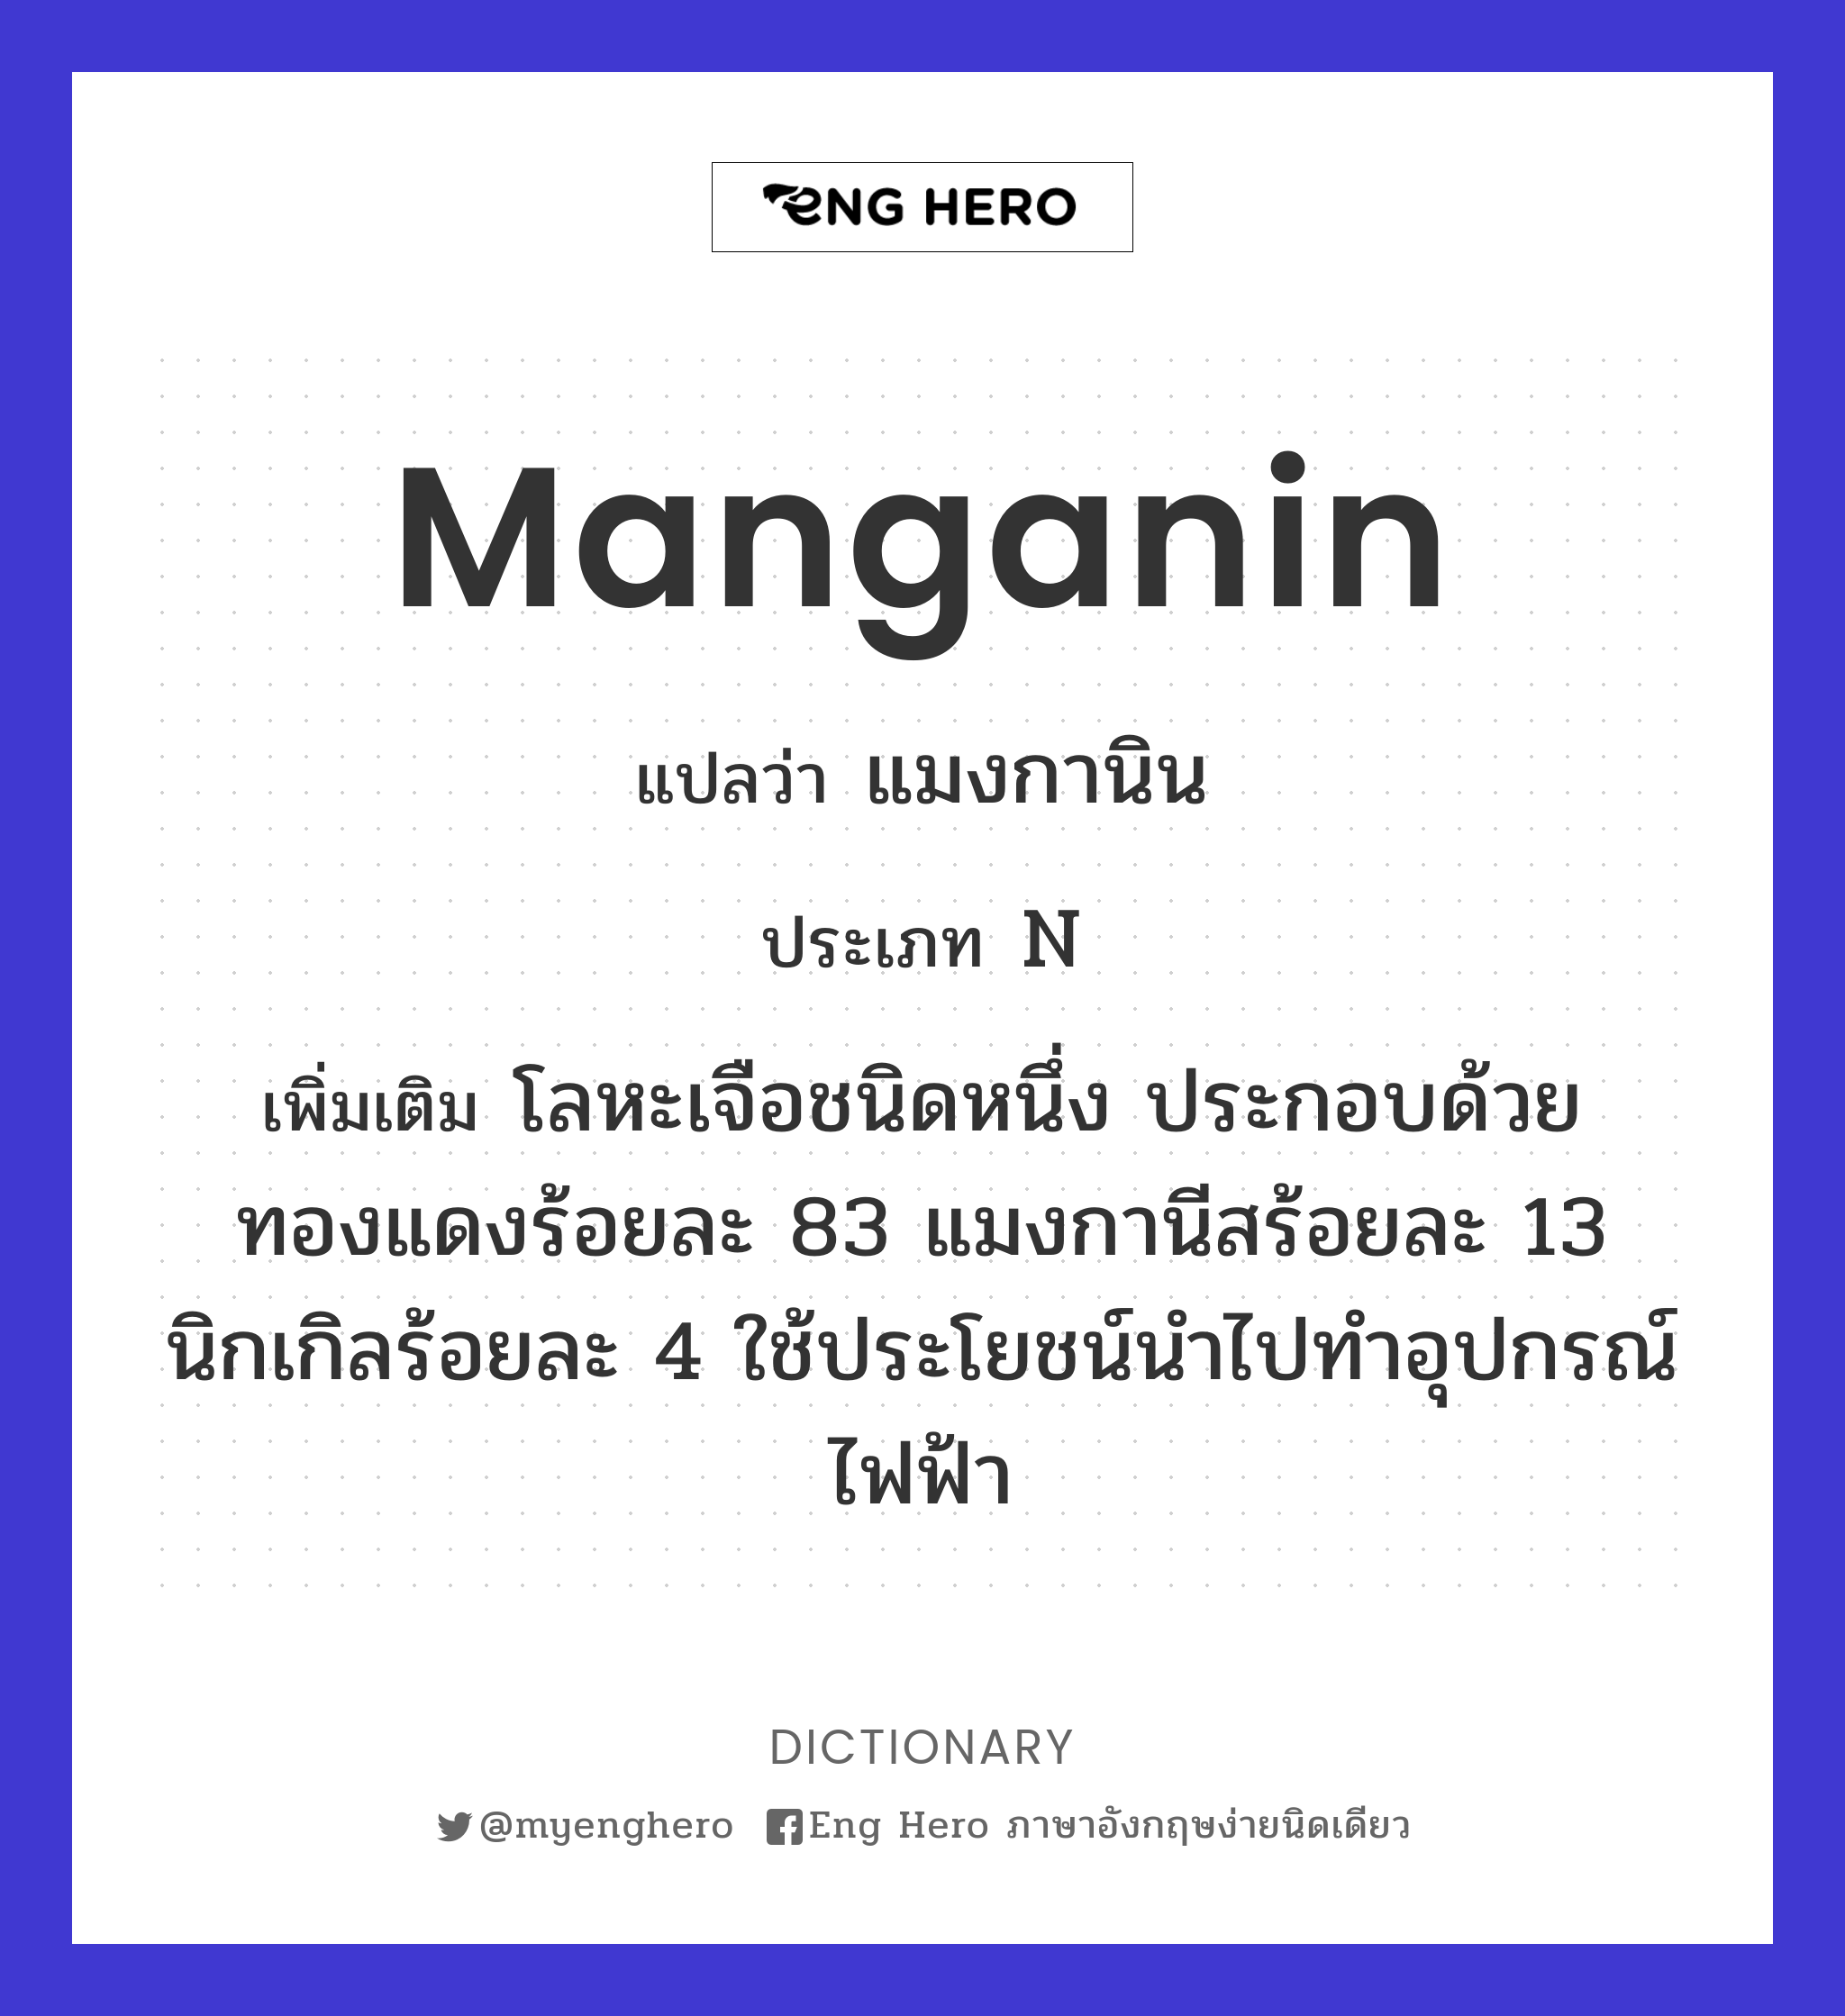 manganin